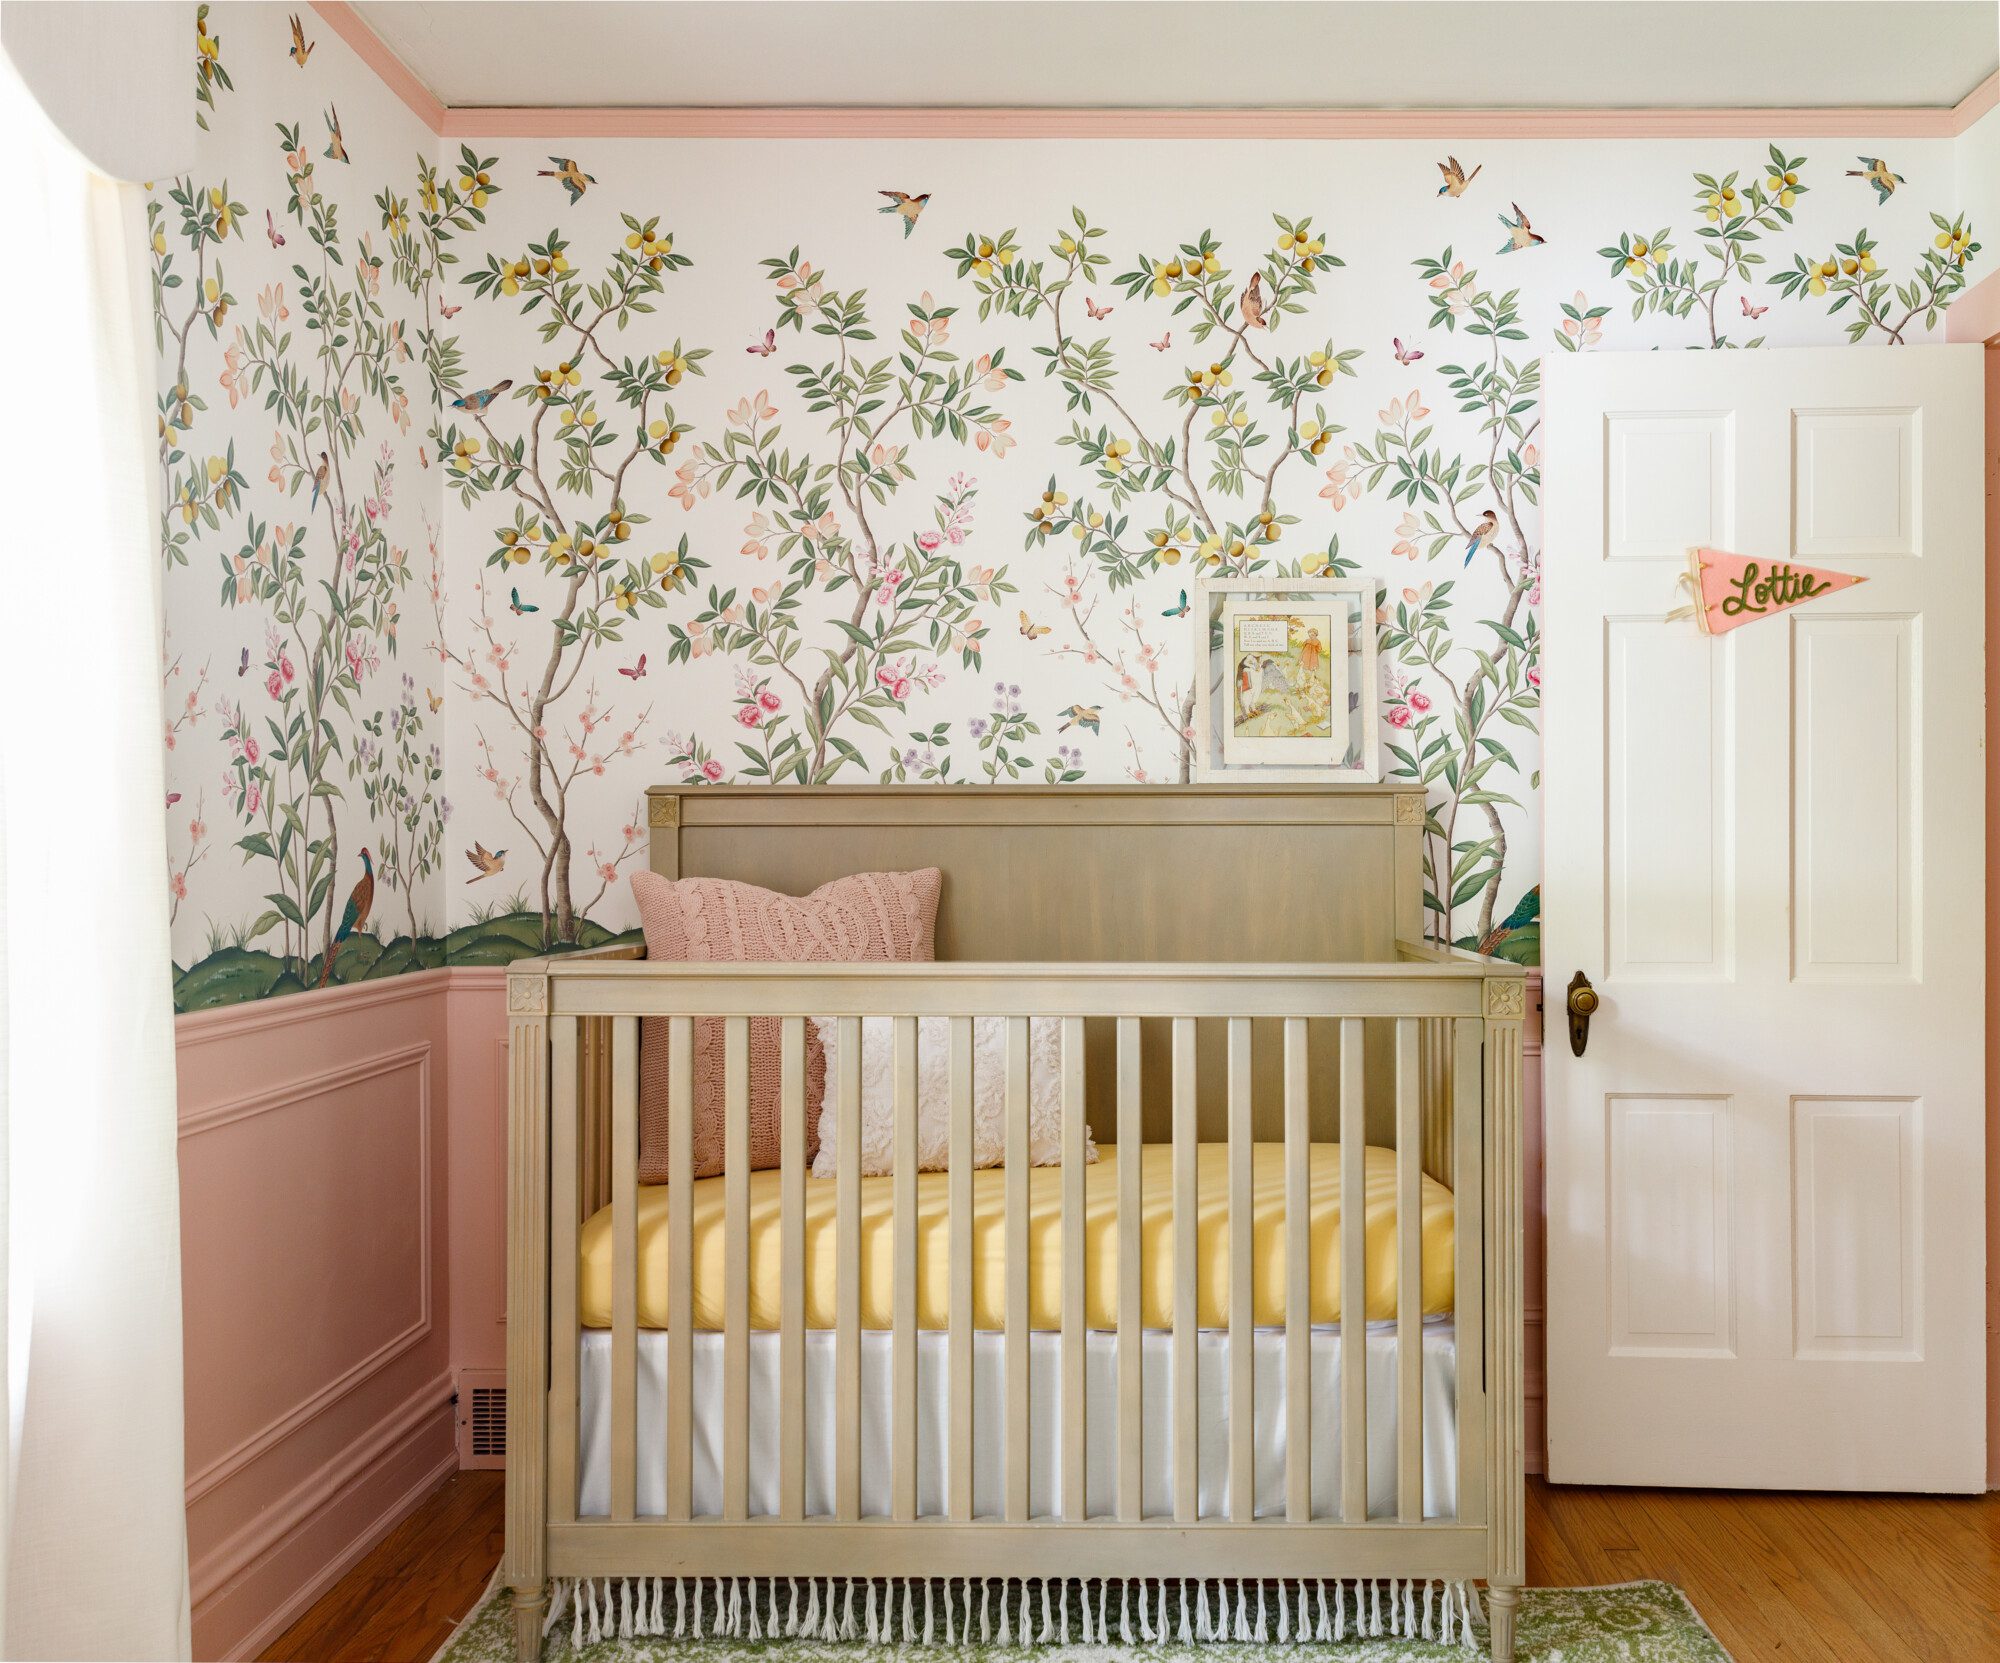 pastel botanical wallpaper is the backdrop of a gorgeous tan crib